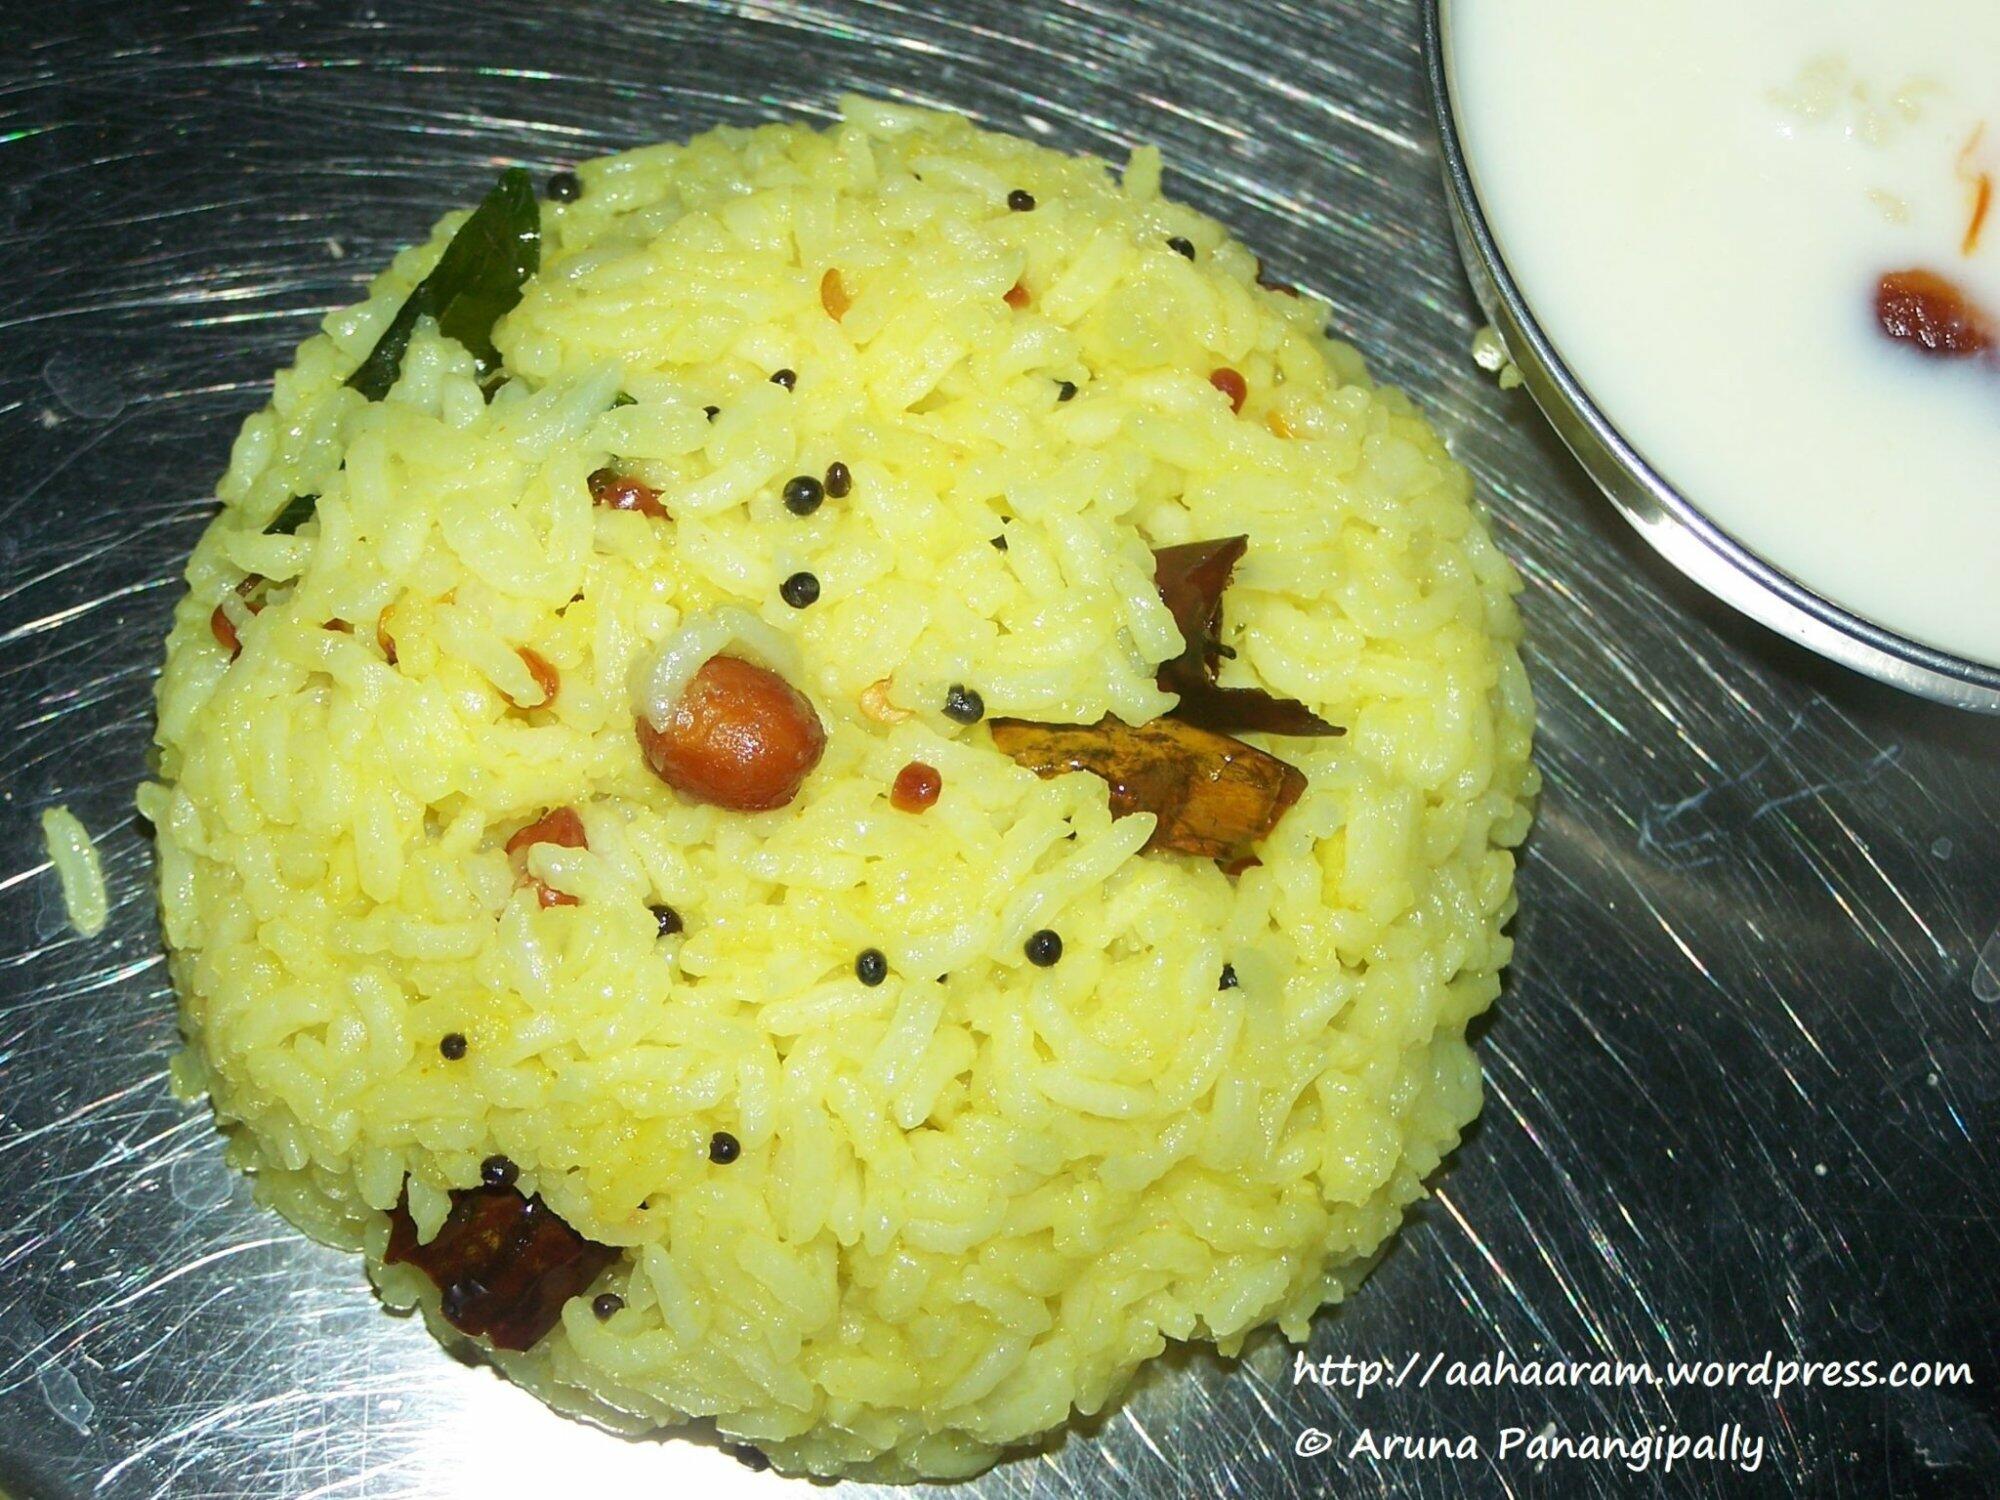 Nimmakaya Pulihora, Elumichai Sadam, Lemon Rice